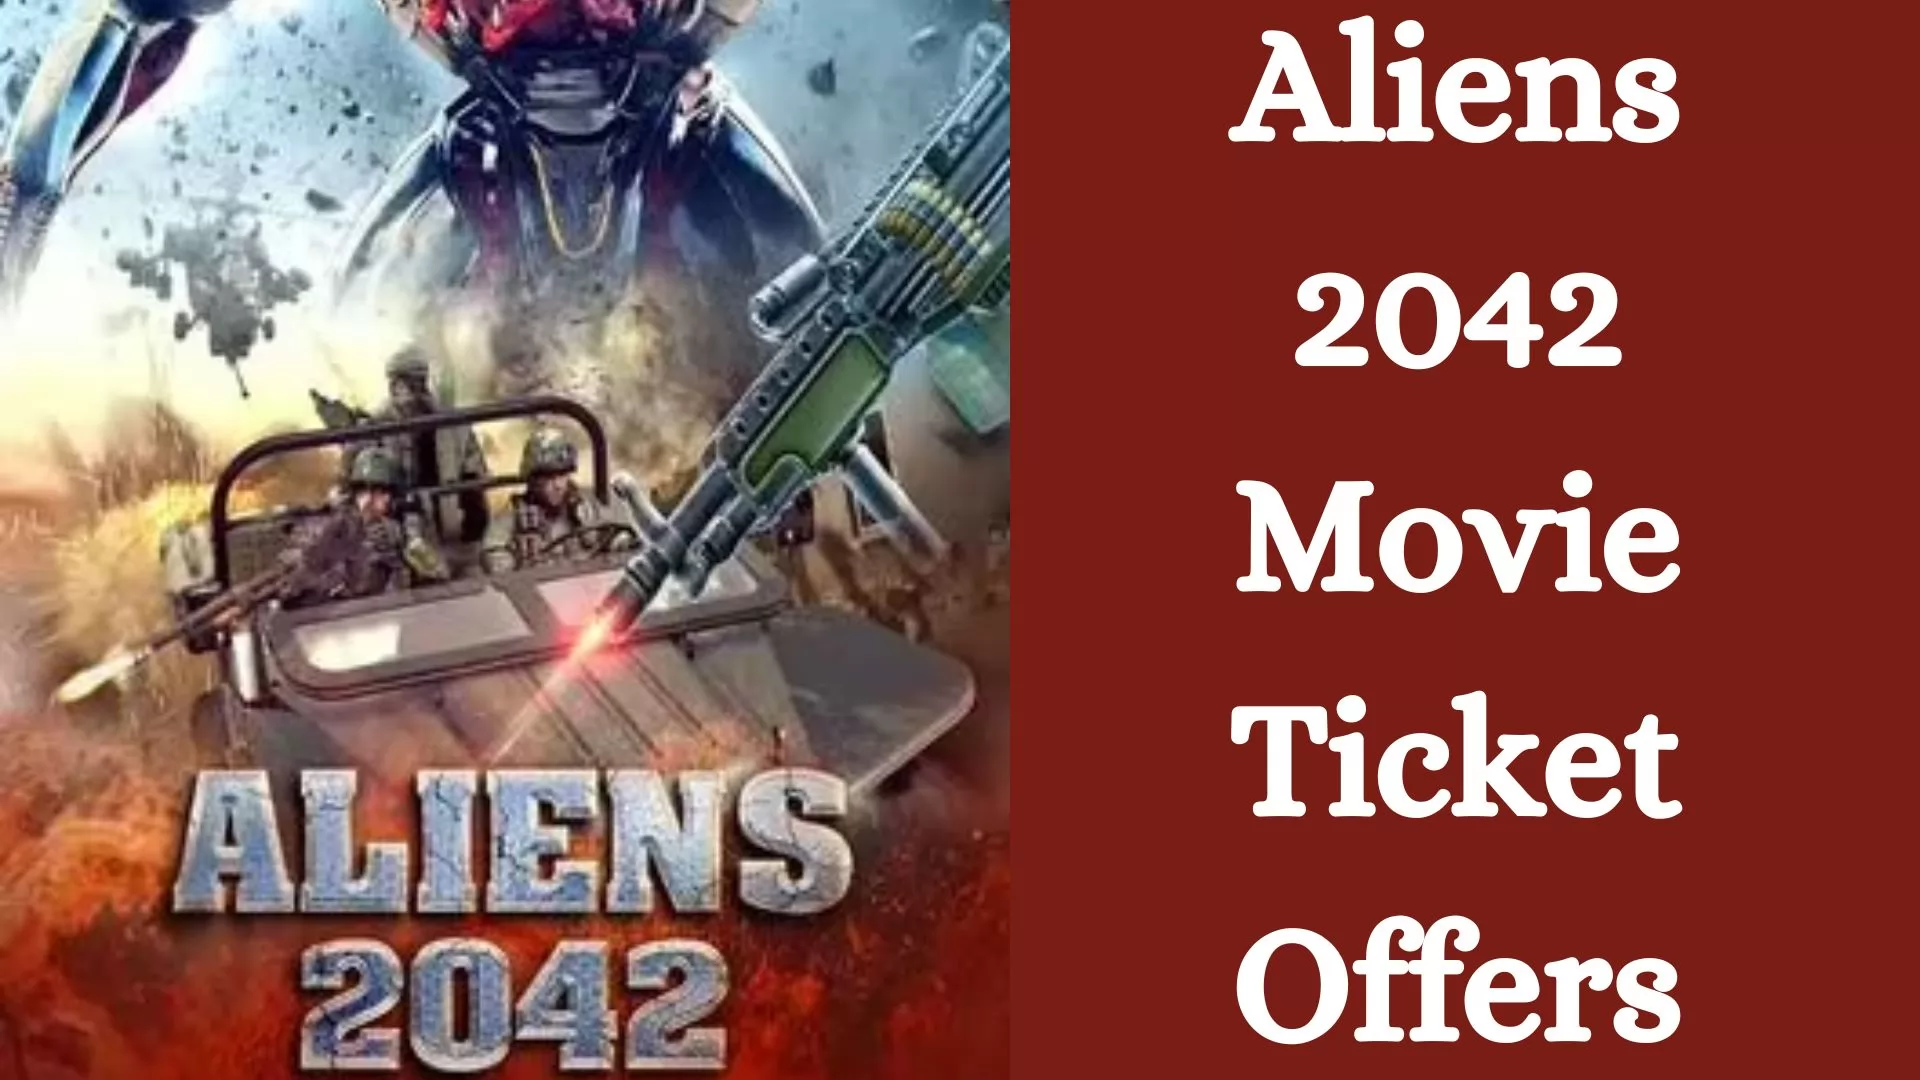 Aliens 2042 Movie Ticket Offers